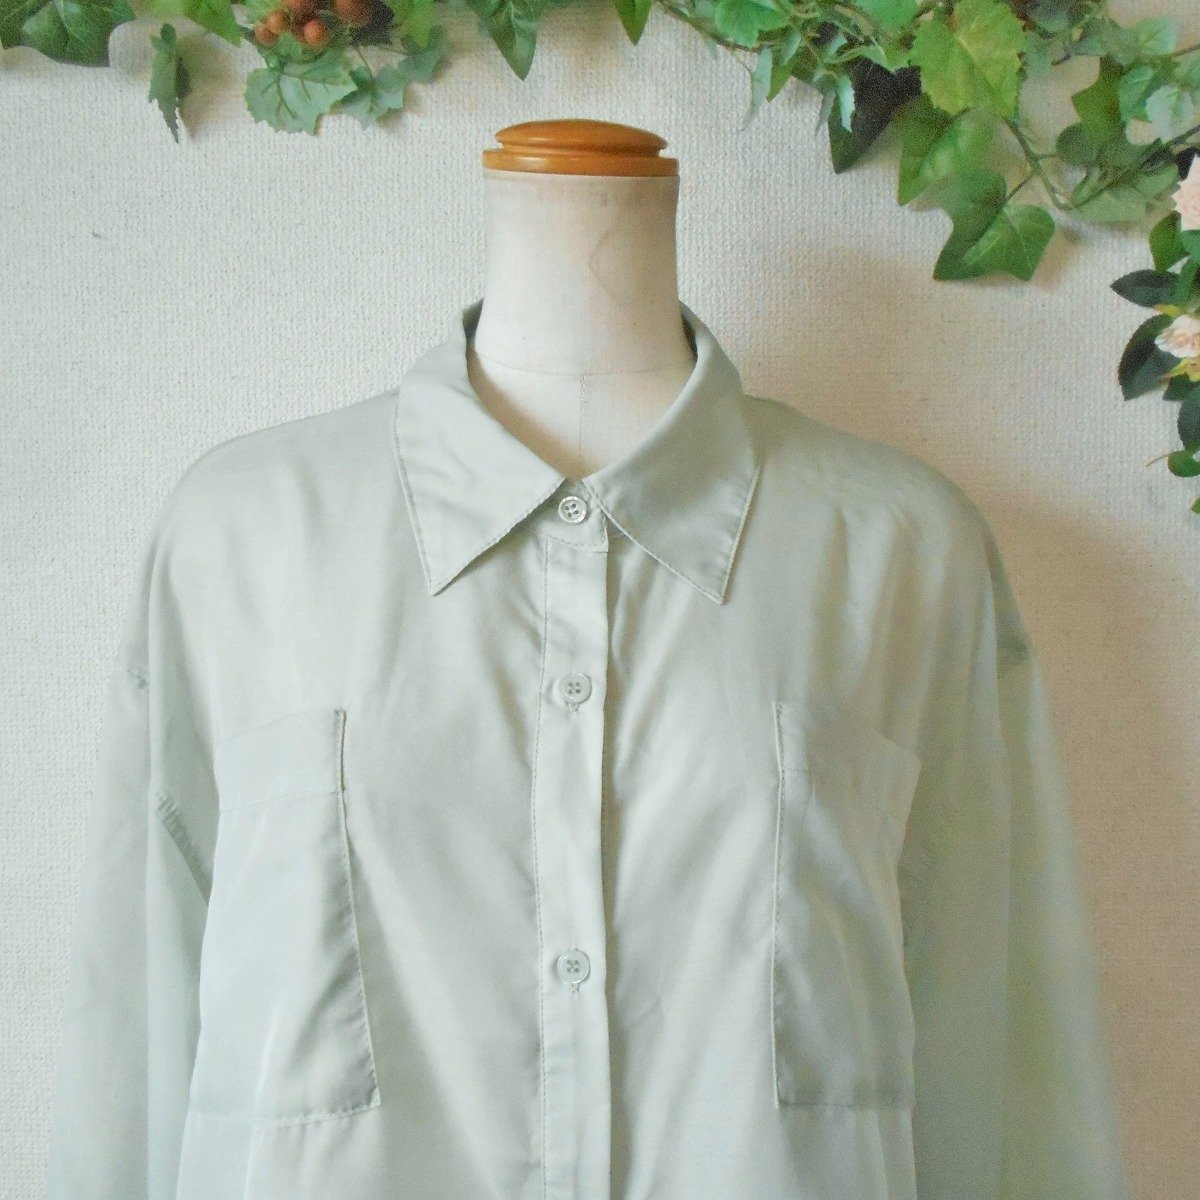  wing INGNI shirt blouse see-through M lady's short spring summer 